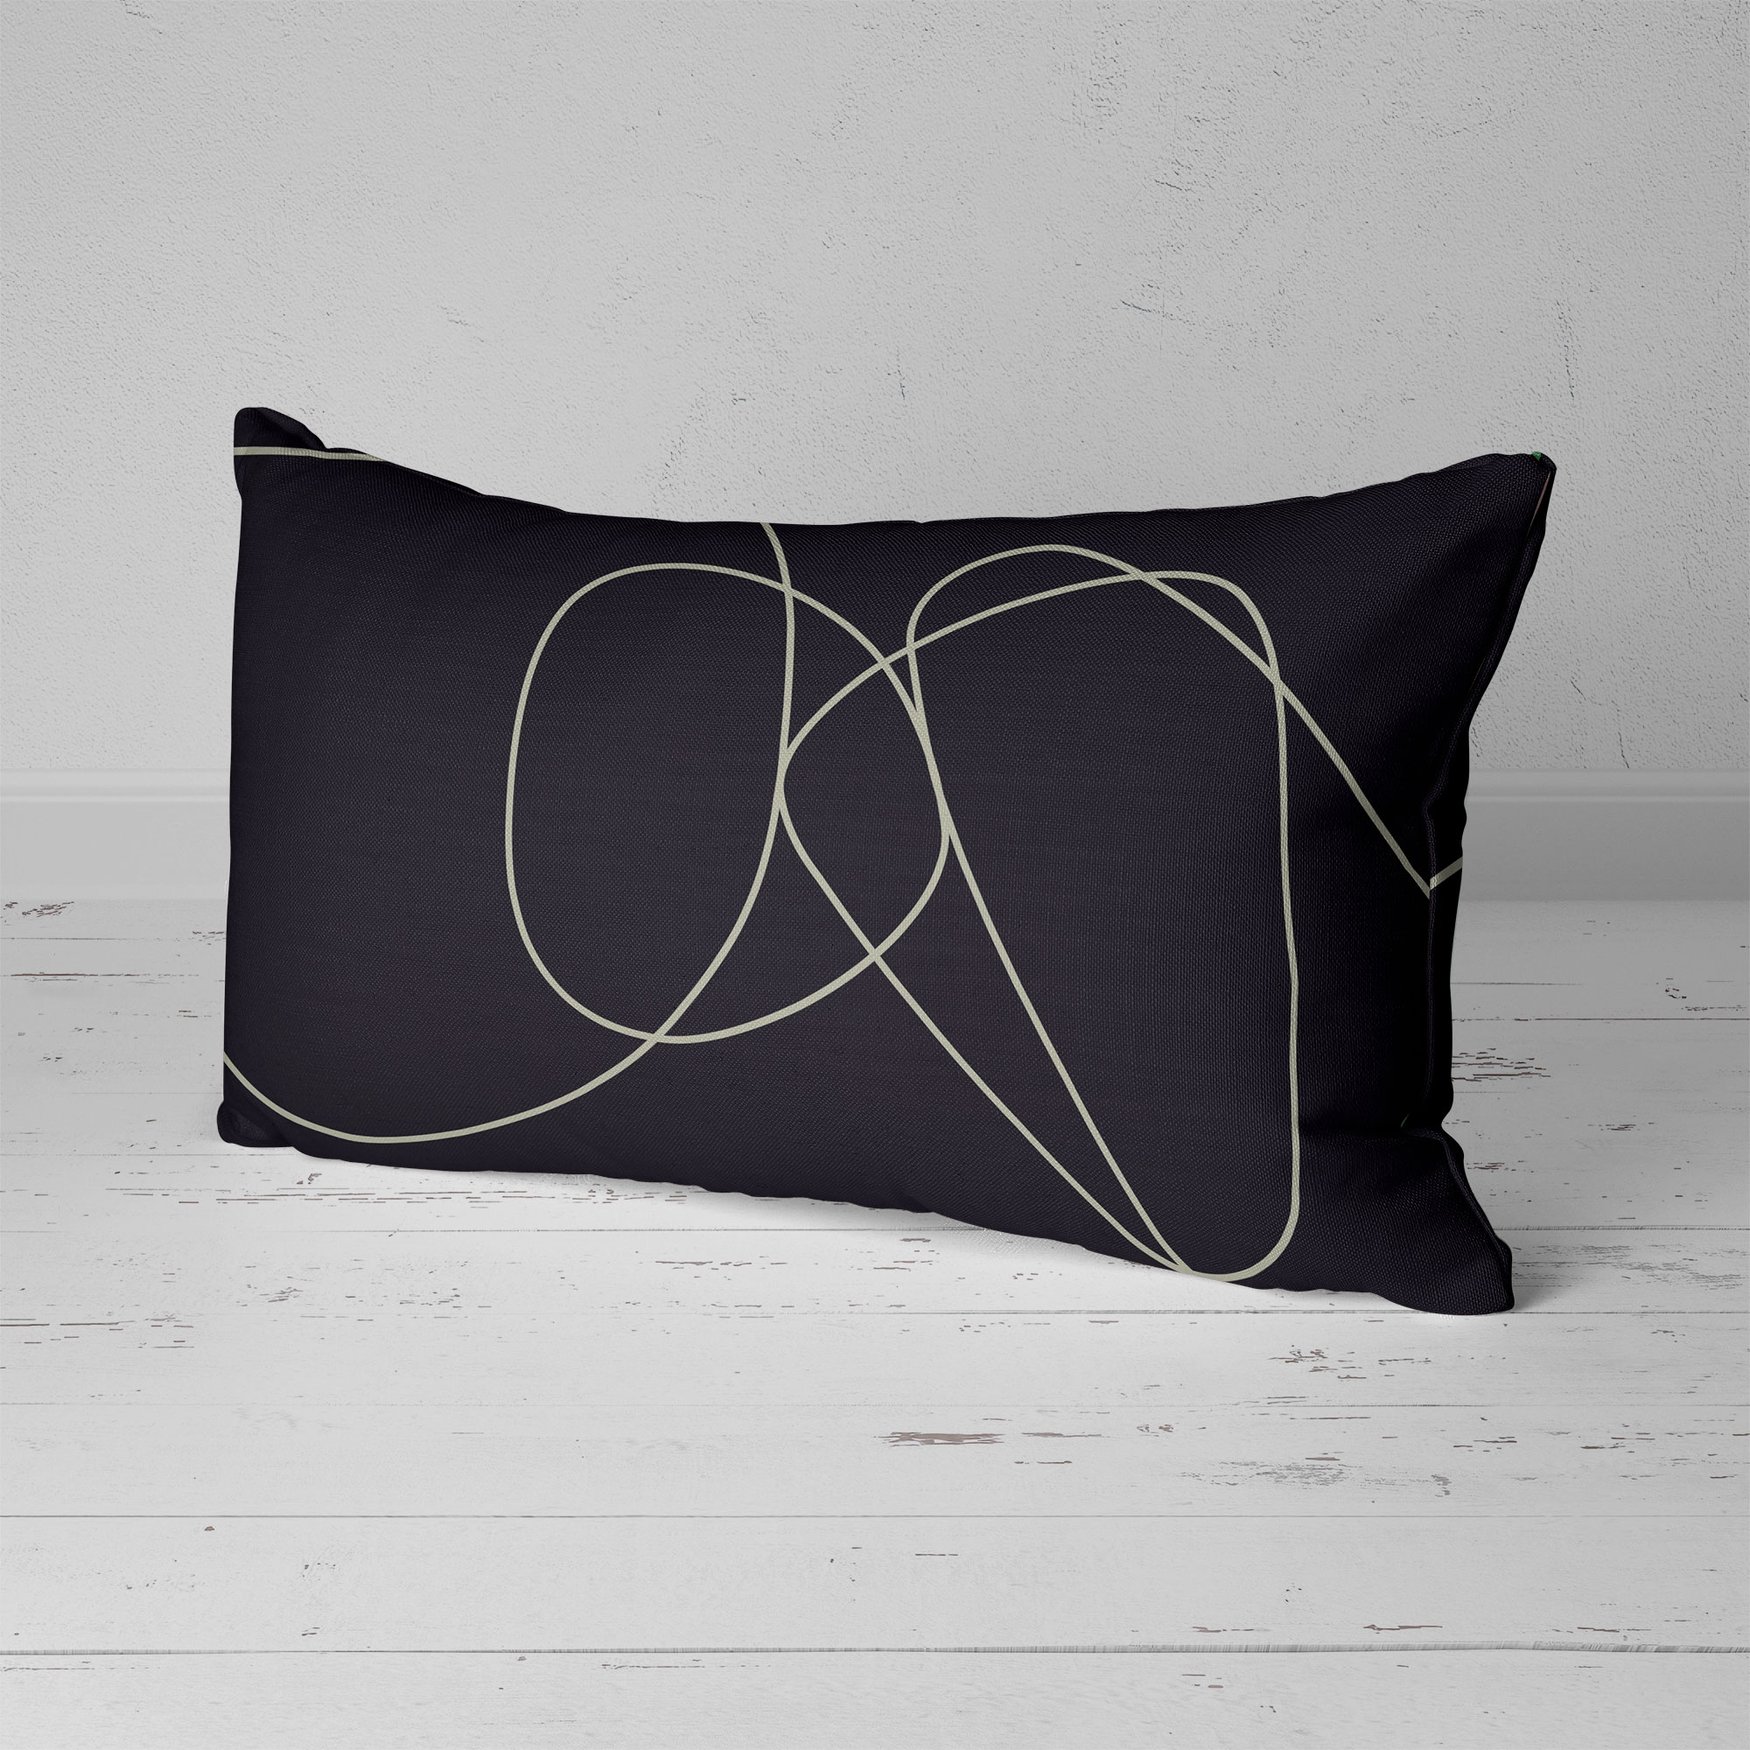 Image of Rock Garden No. 1 Rectangular Throw Pillow in Charcoal Gray